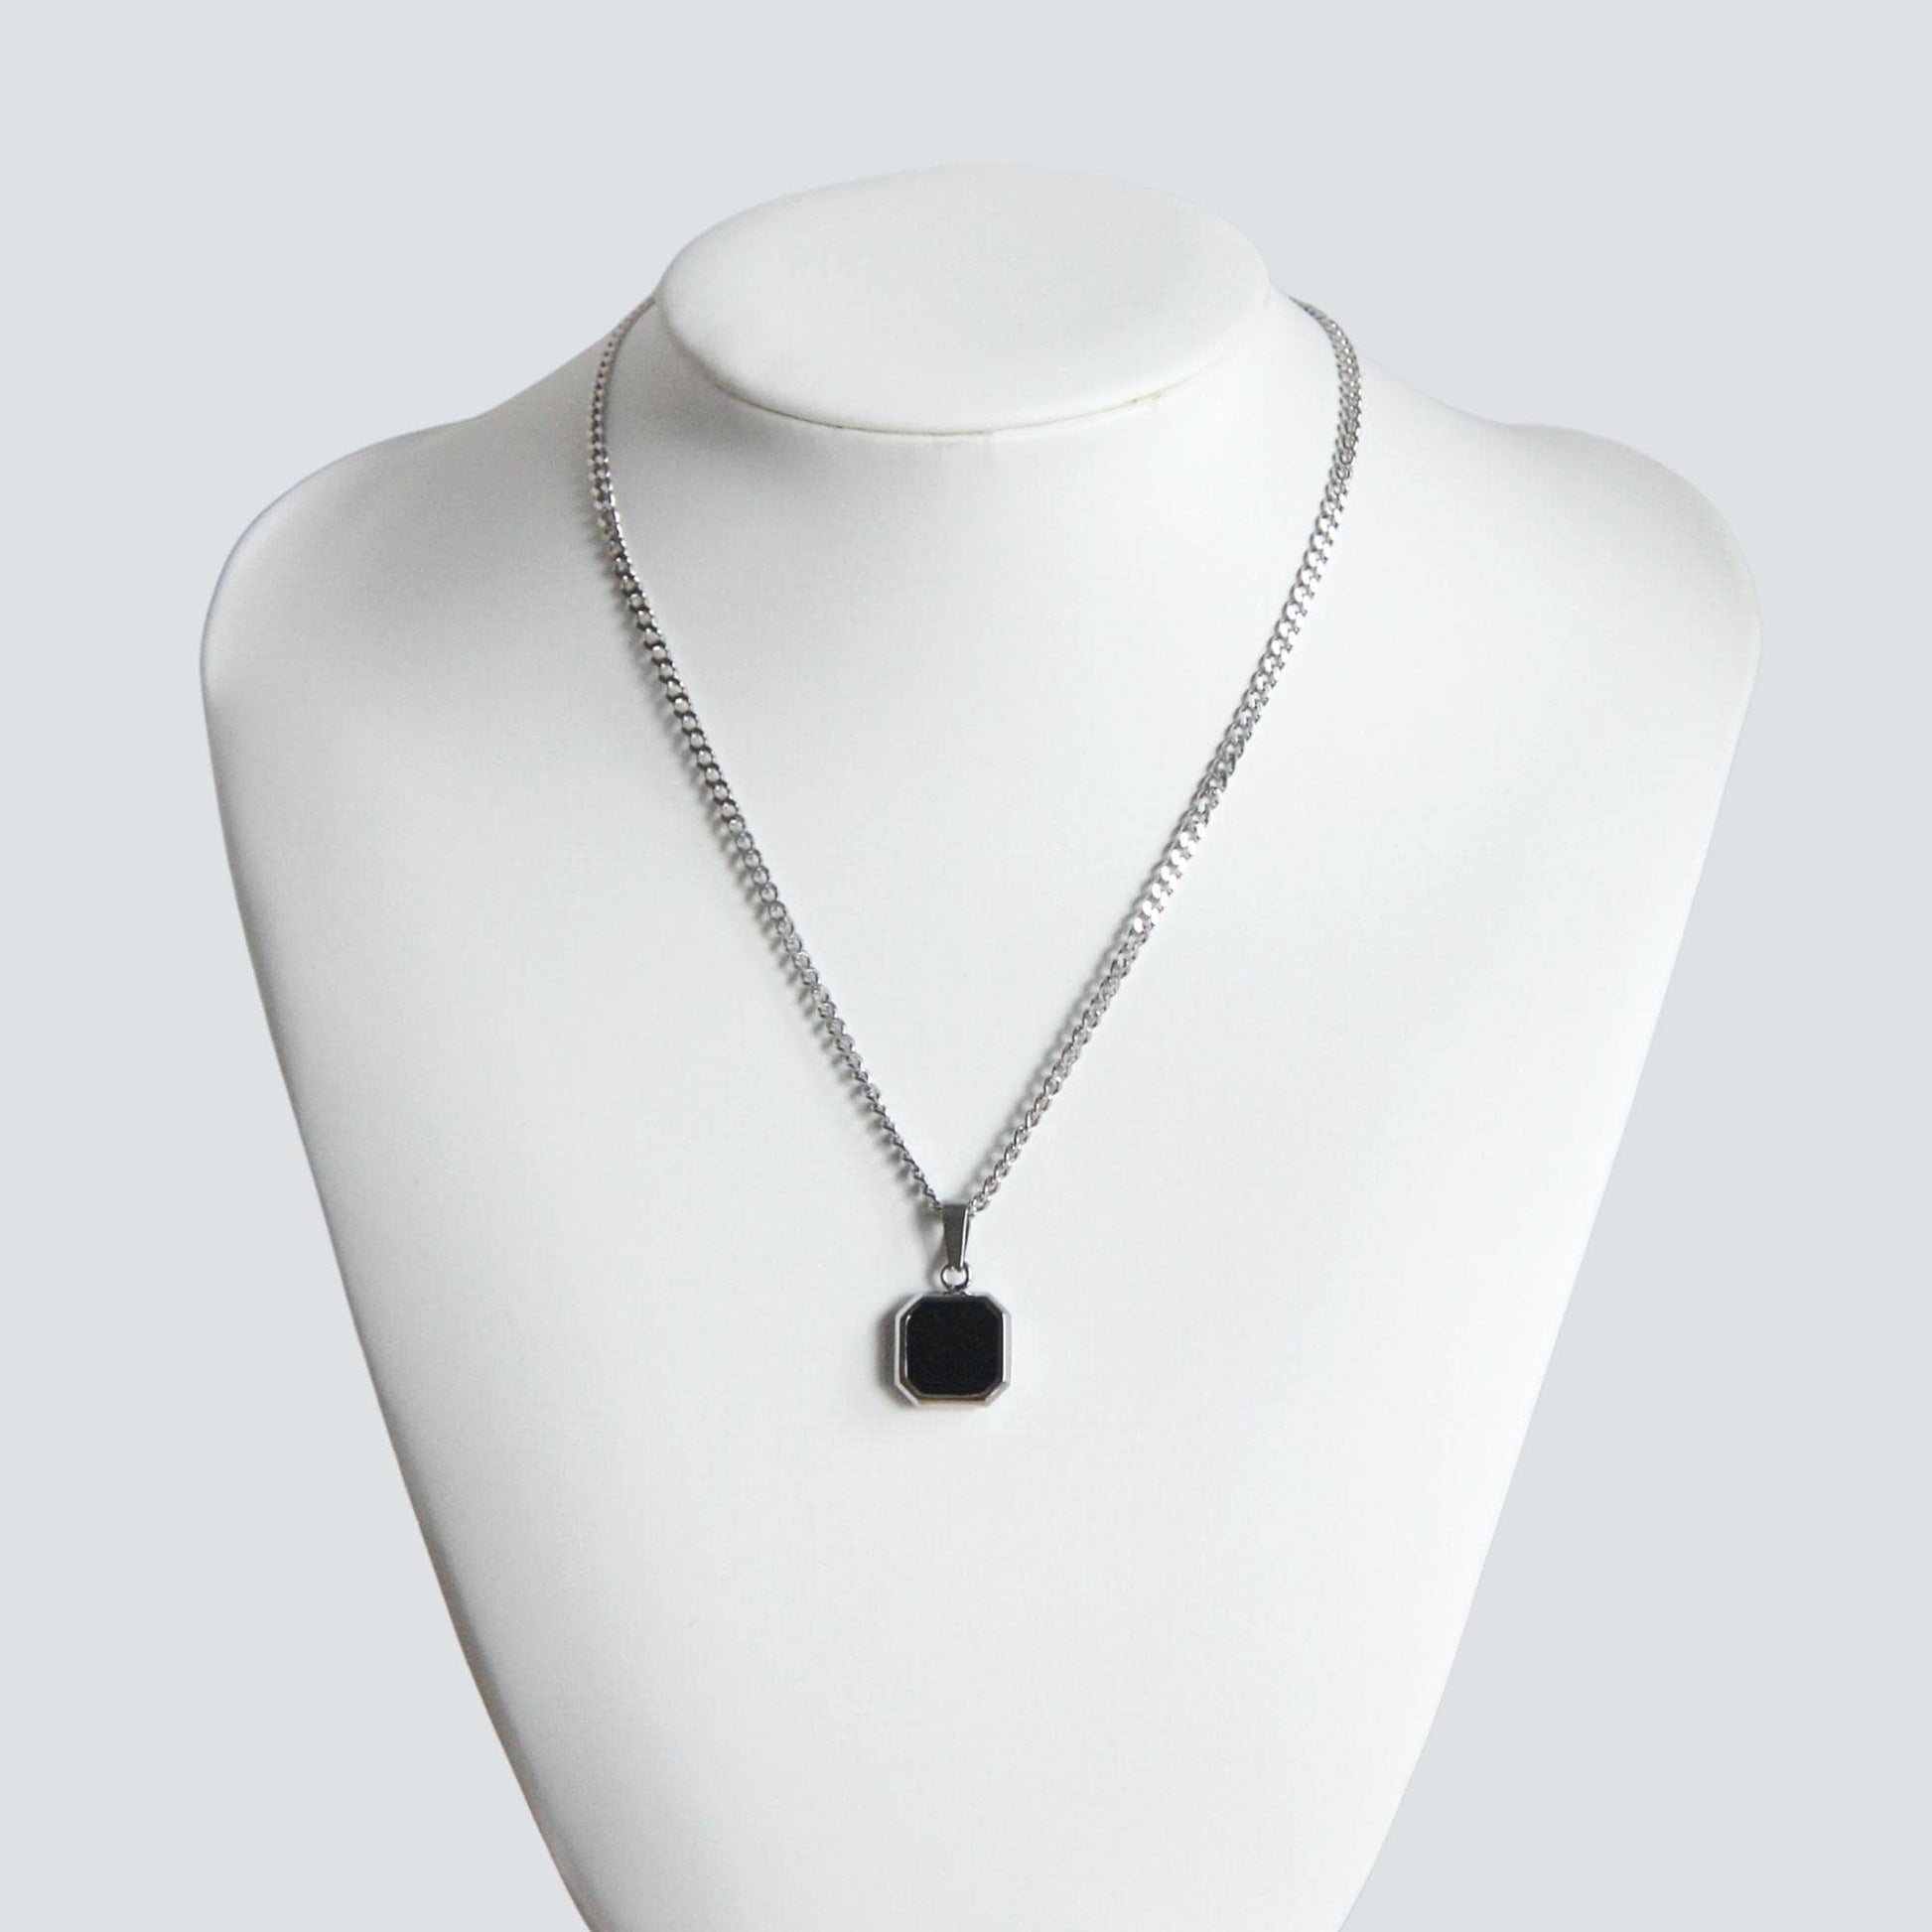 Silver Black, White or Blue Square Pendant Necklace For Men or Women -  Boutique Wear RENN